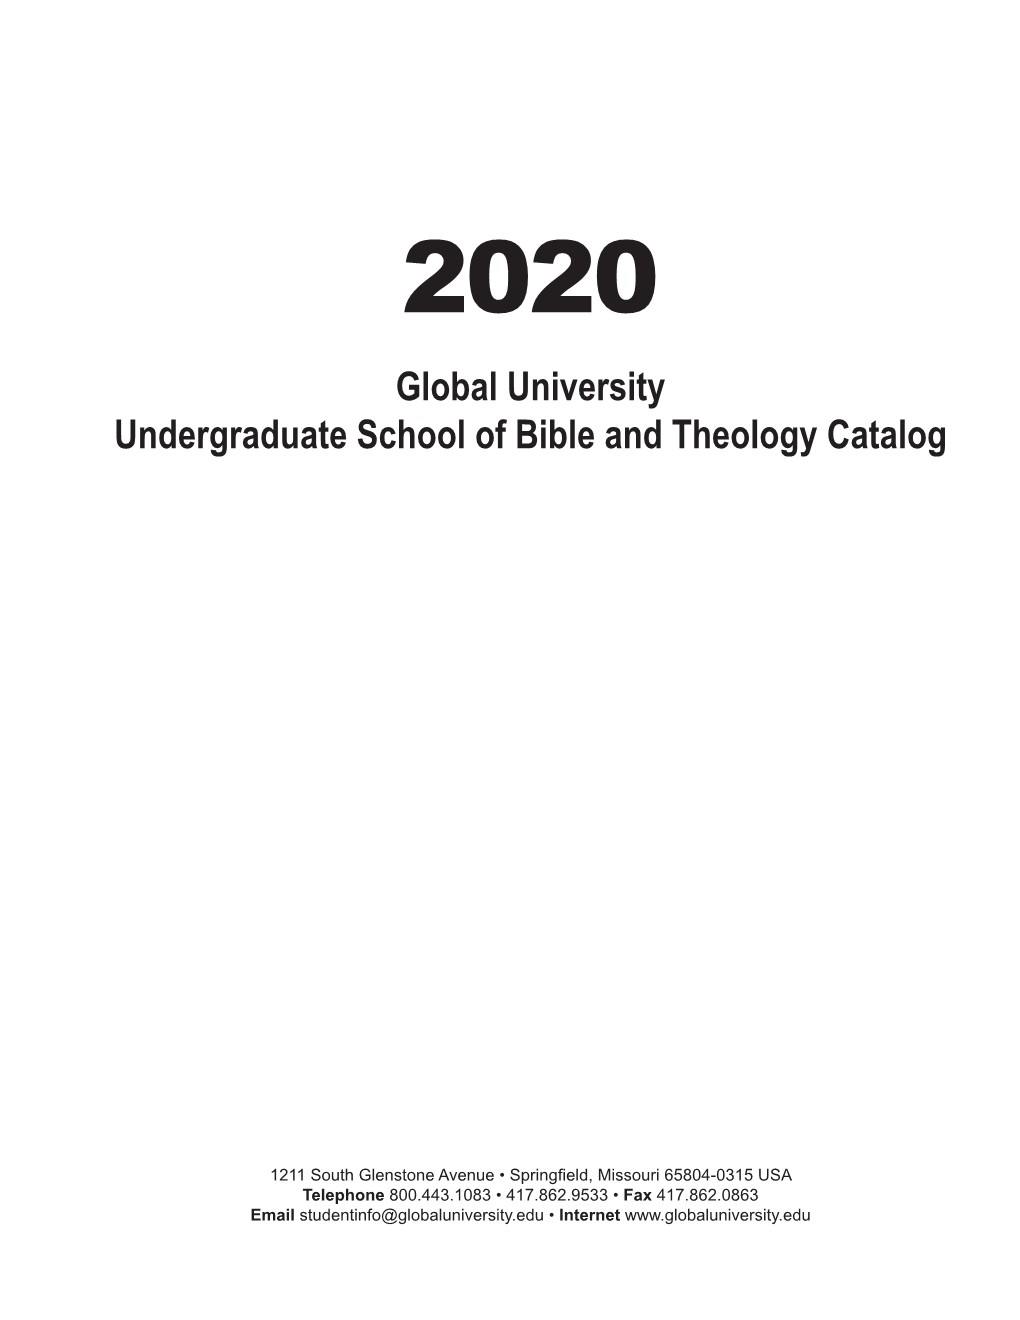 Global University Undergraduate School of Bible and Theology Catalog